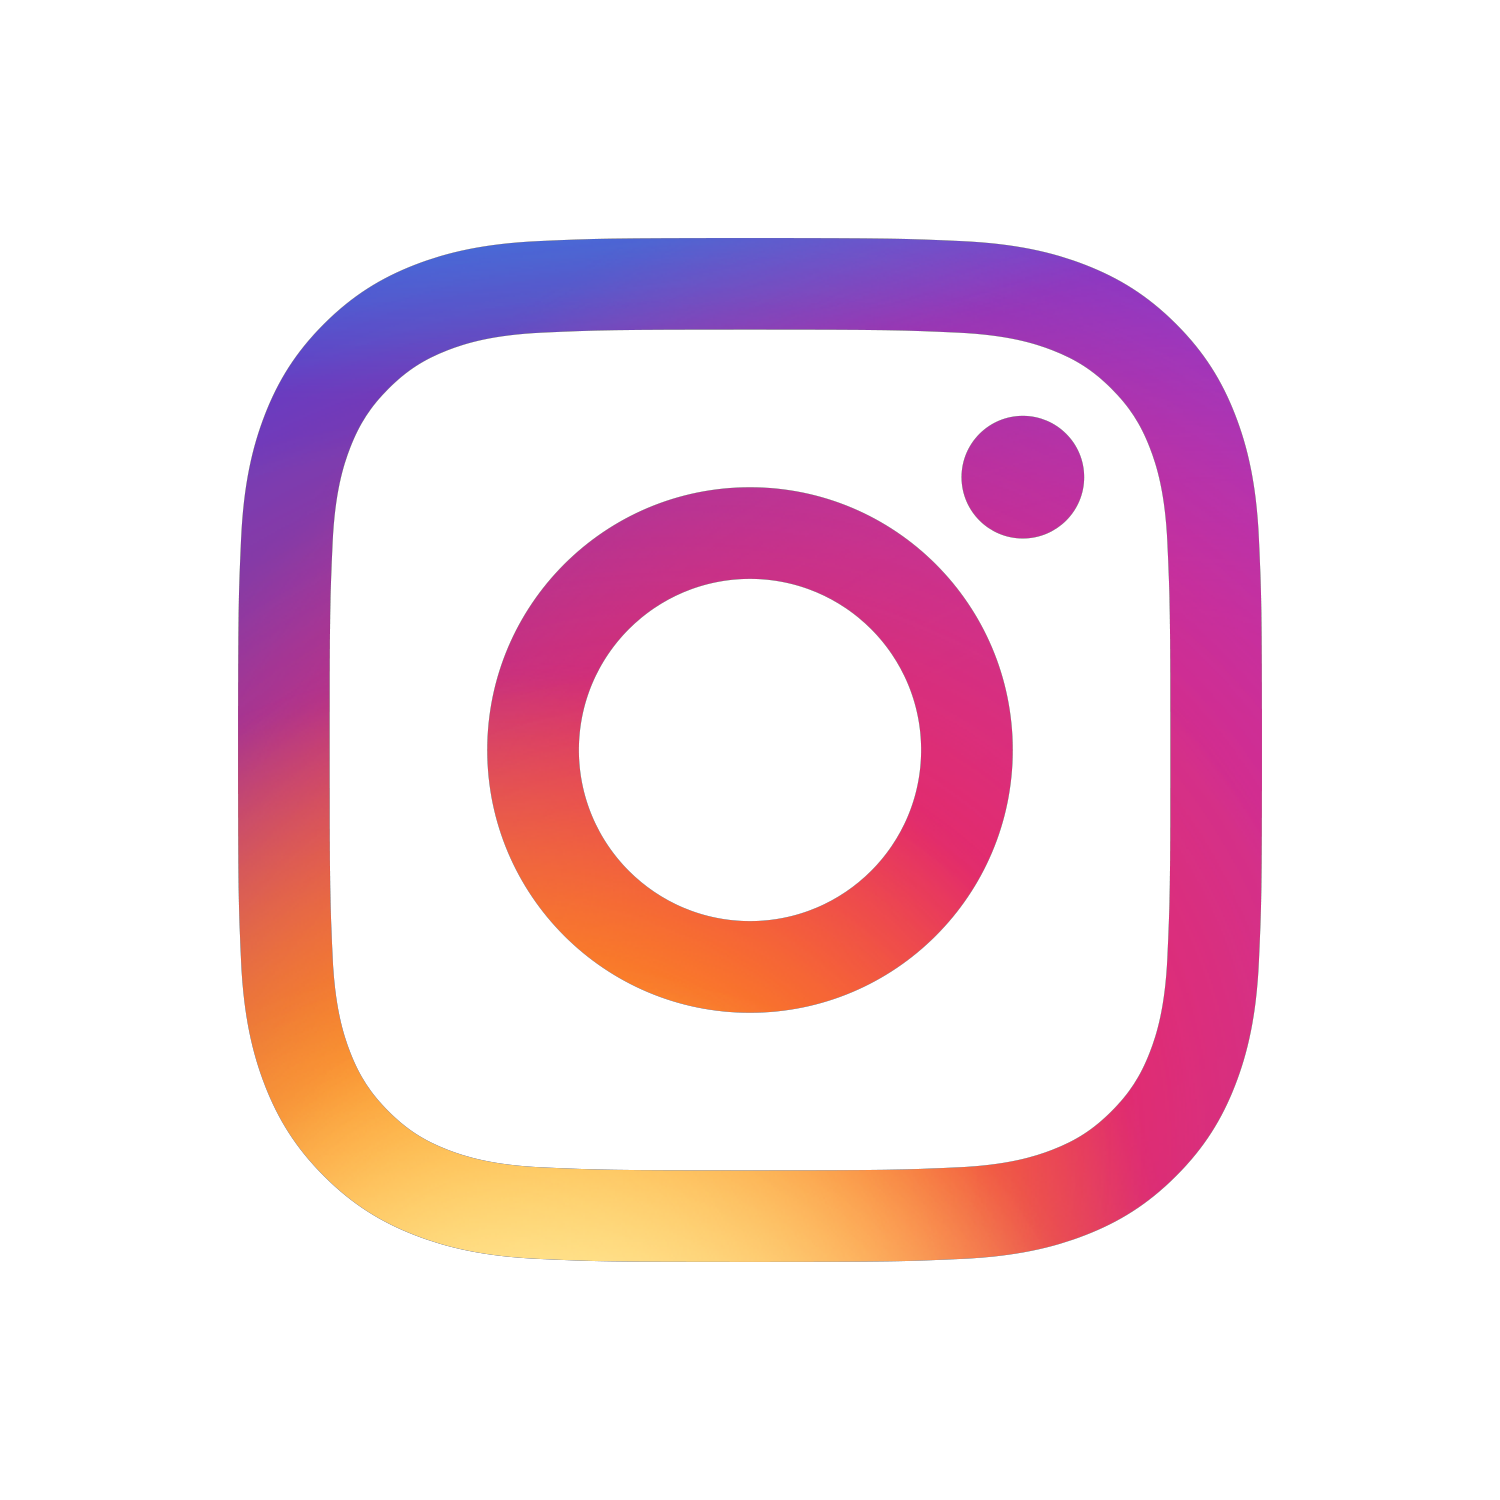 Instagram Logo Simple